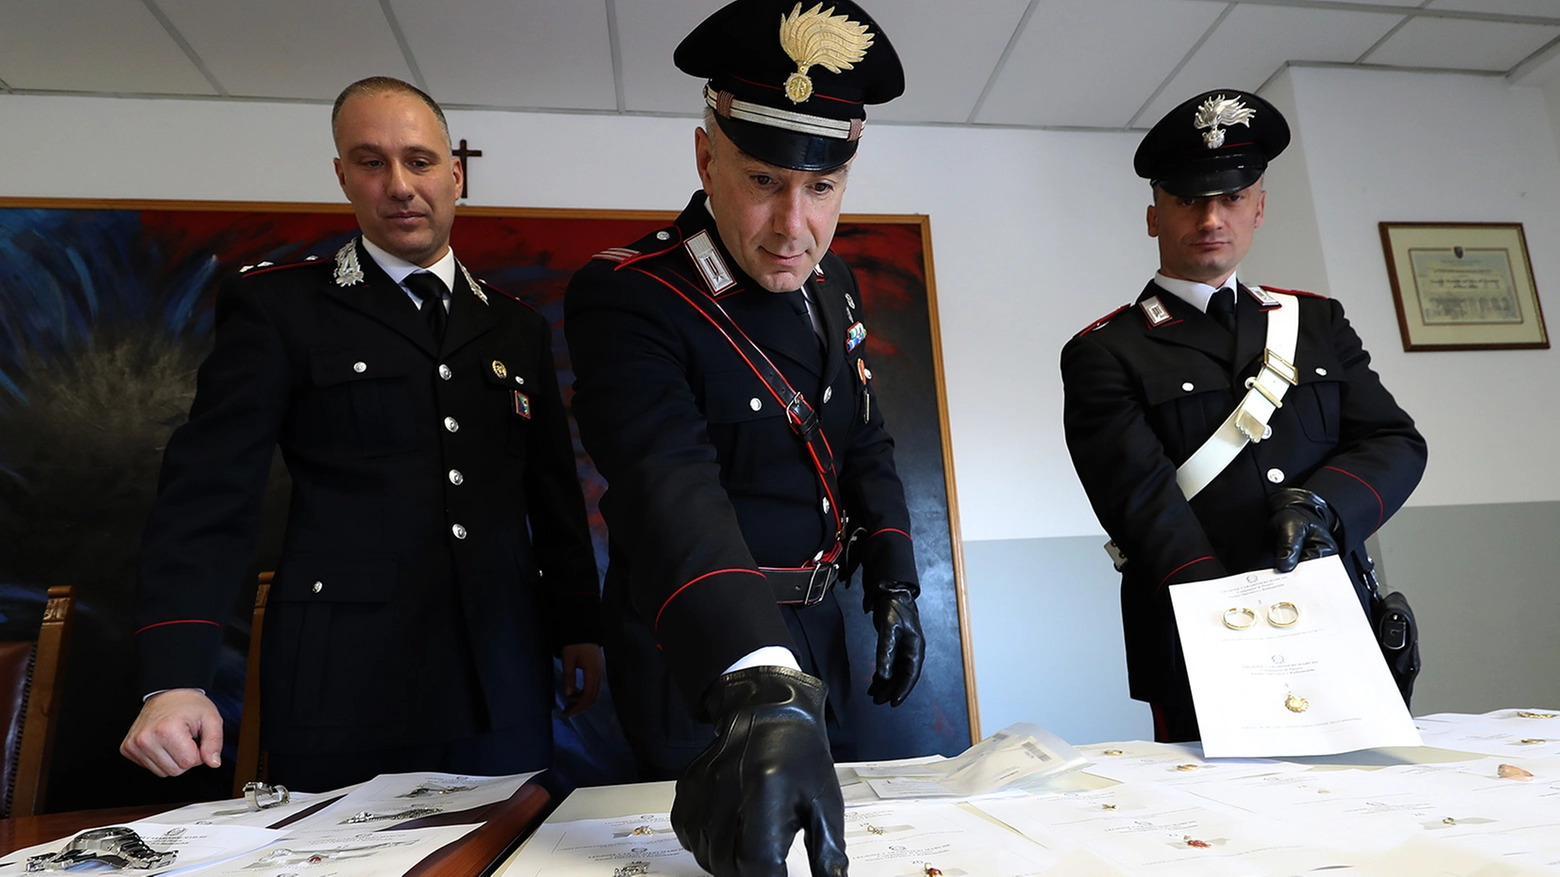 Furti in casa a Pesaro, i carabinieri con la refurtiva (Fotoprint)